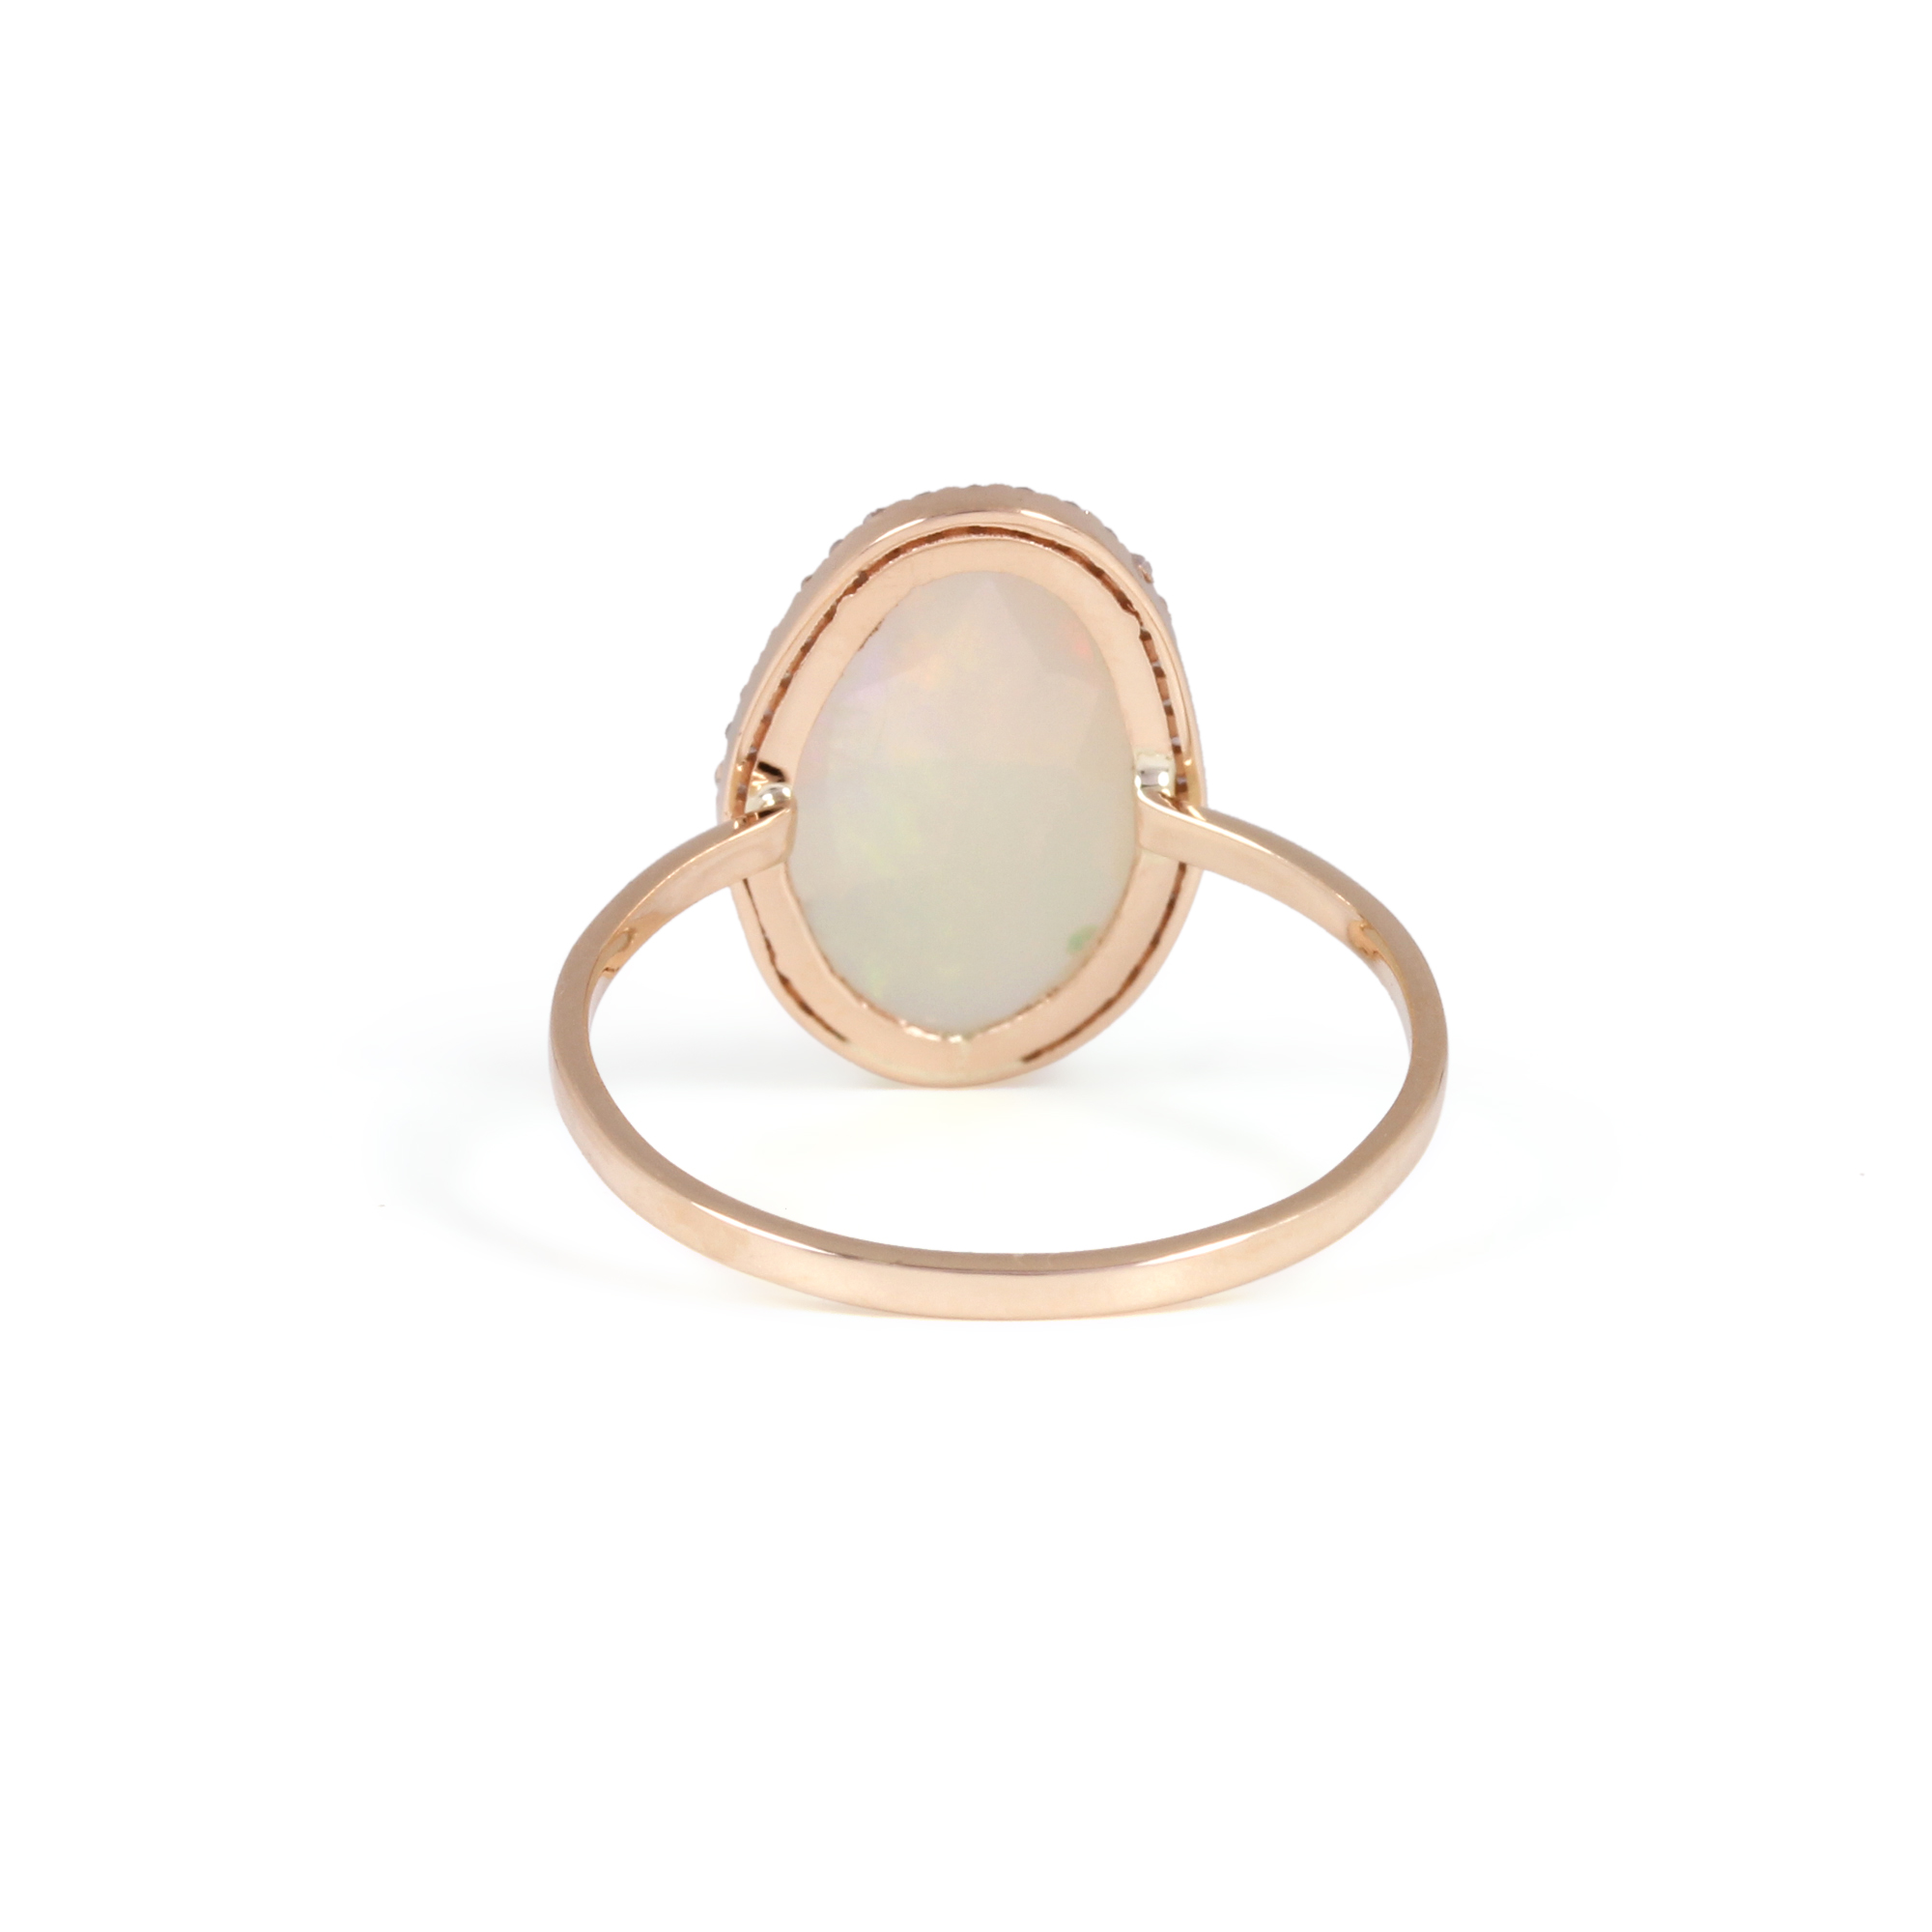 Gemstone Opal Diamond Solid 14K Gold Ring Jewelry